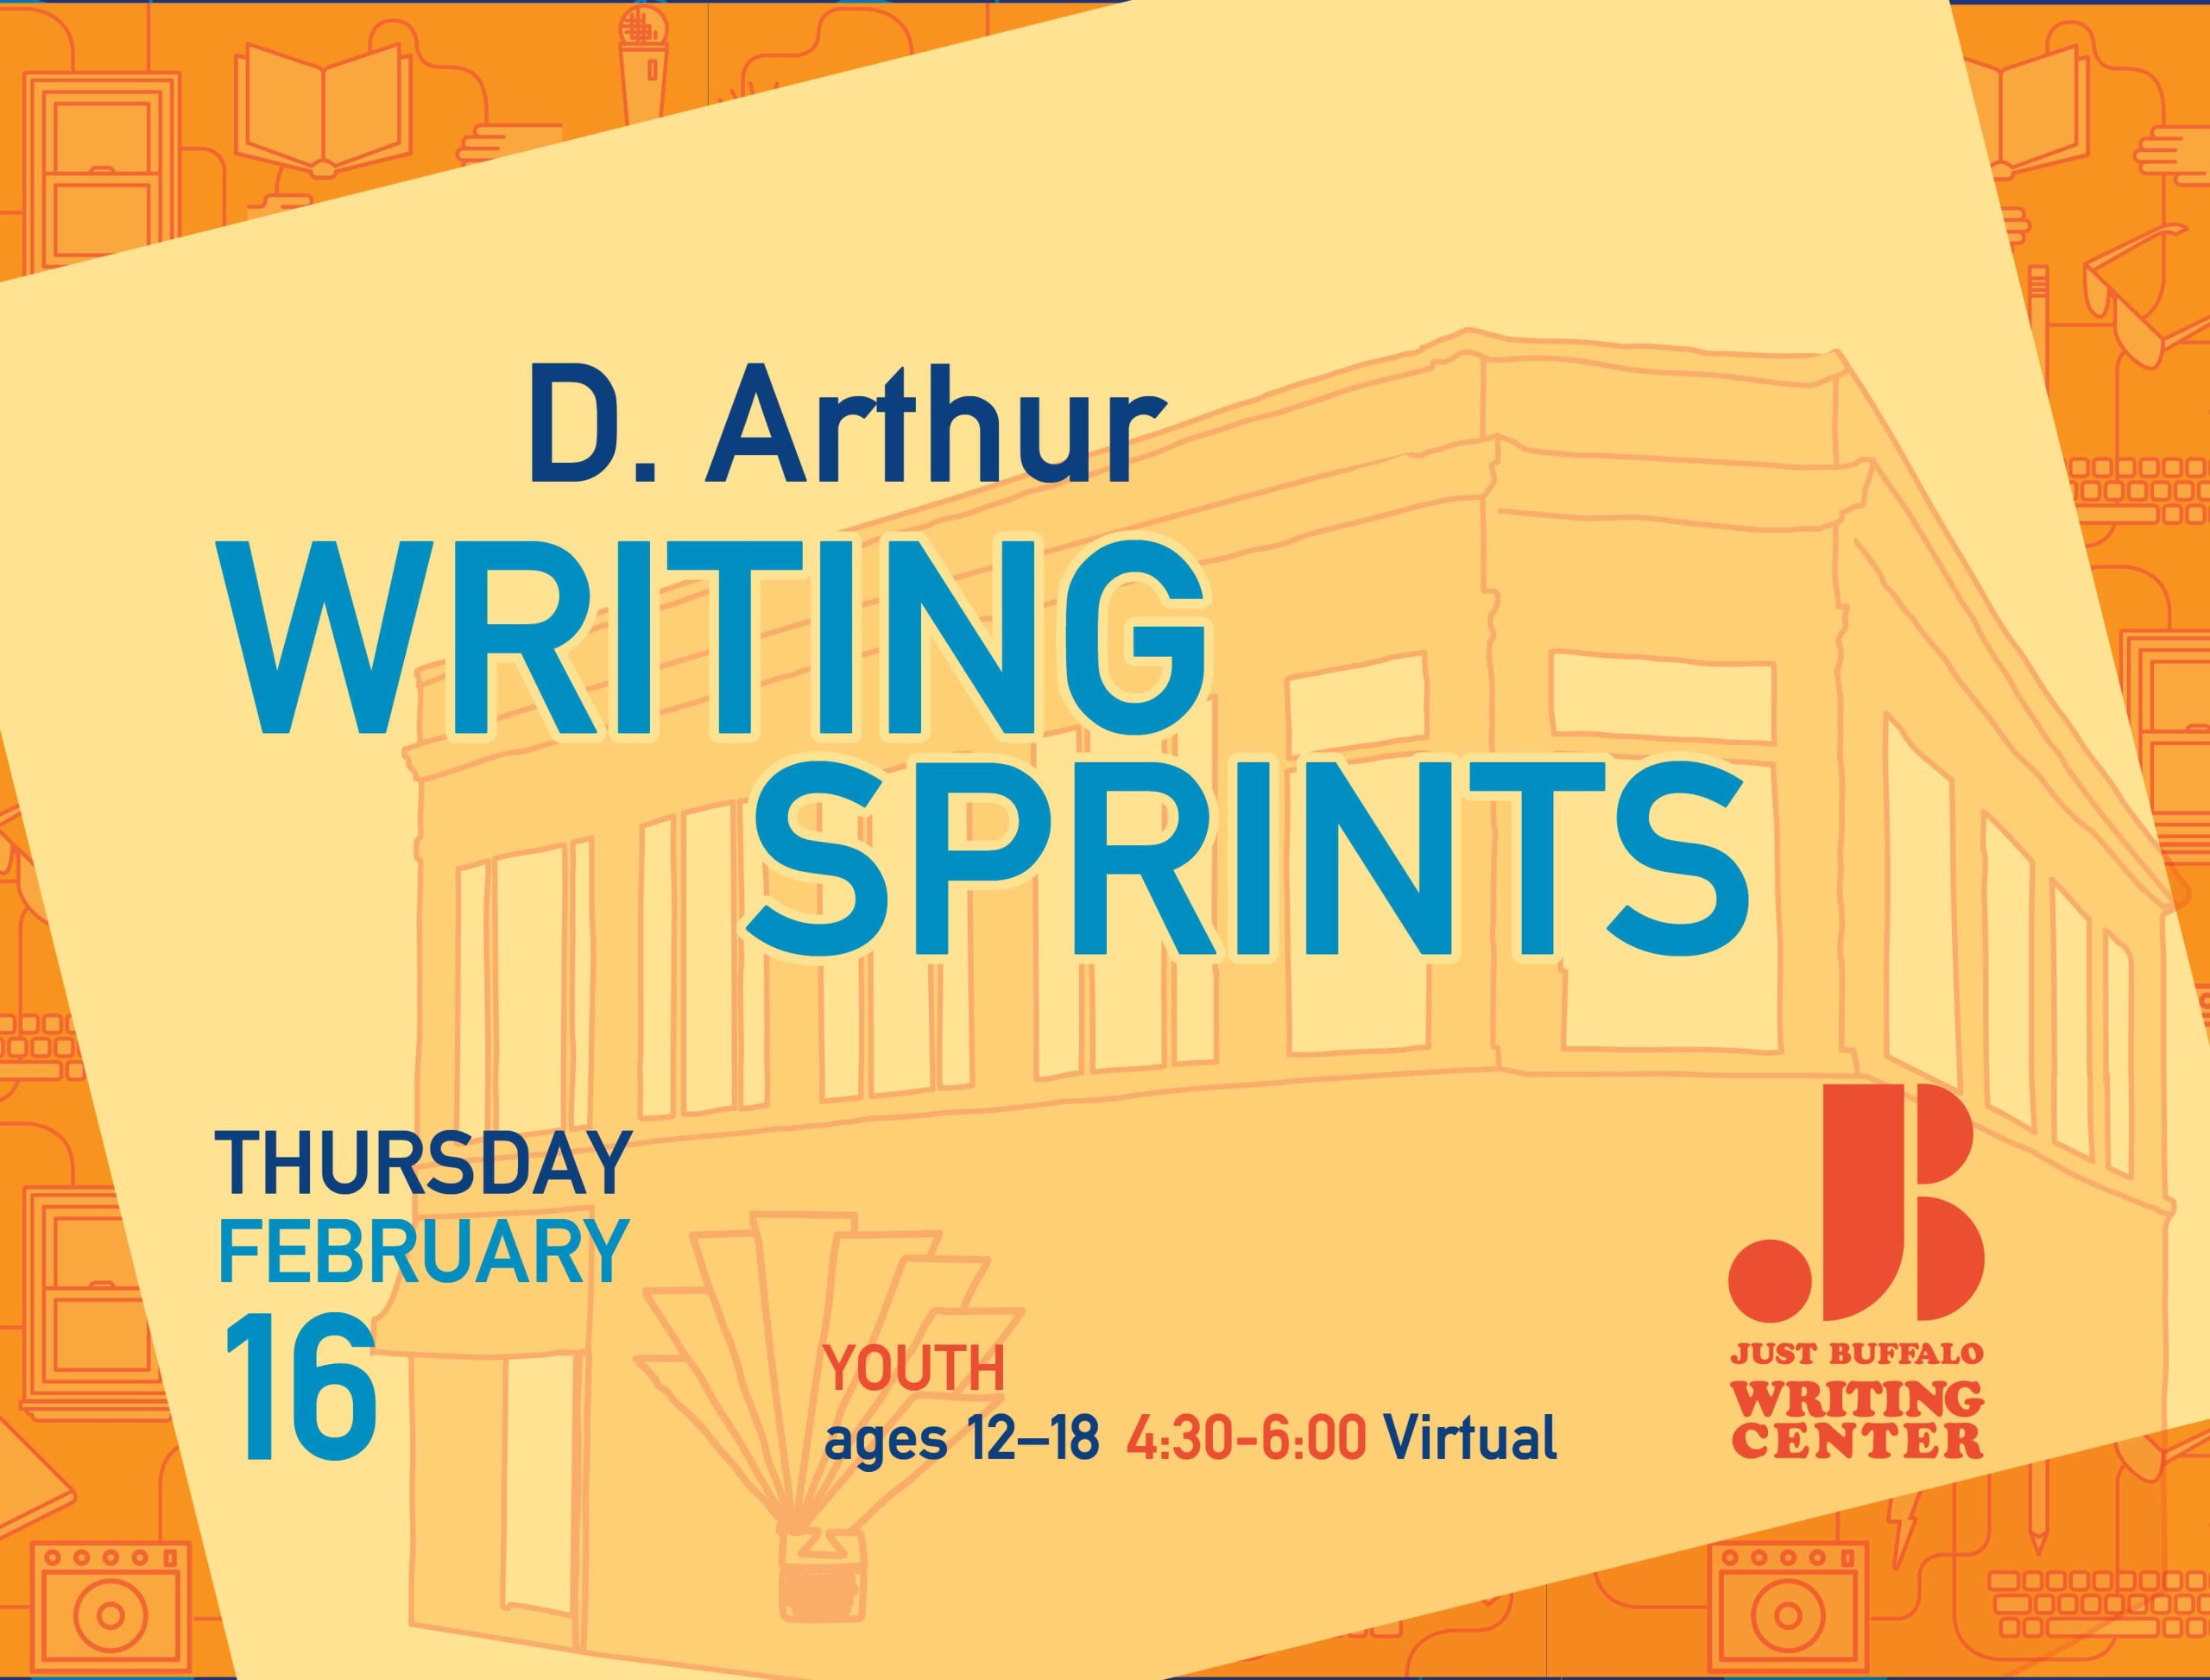 D. Arthur Writing Sprints at the JBWC